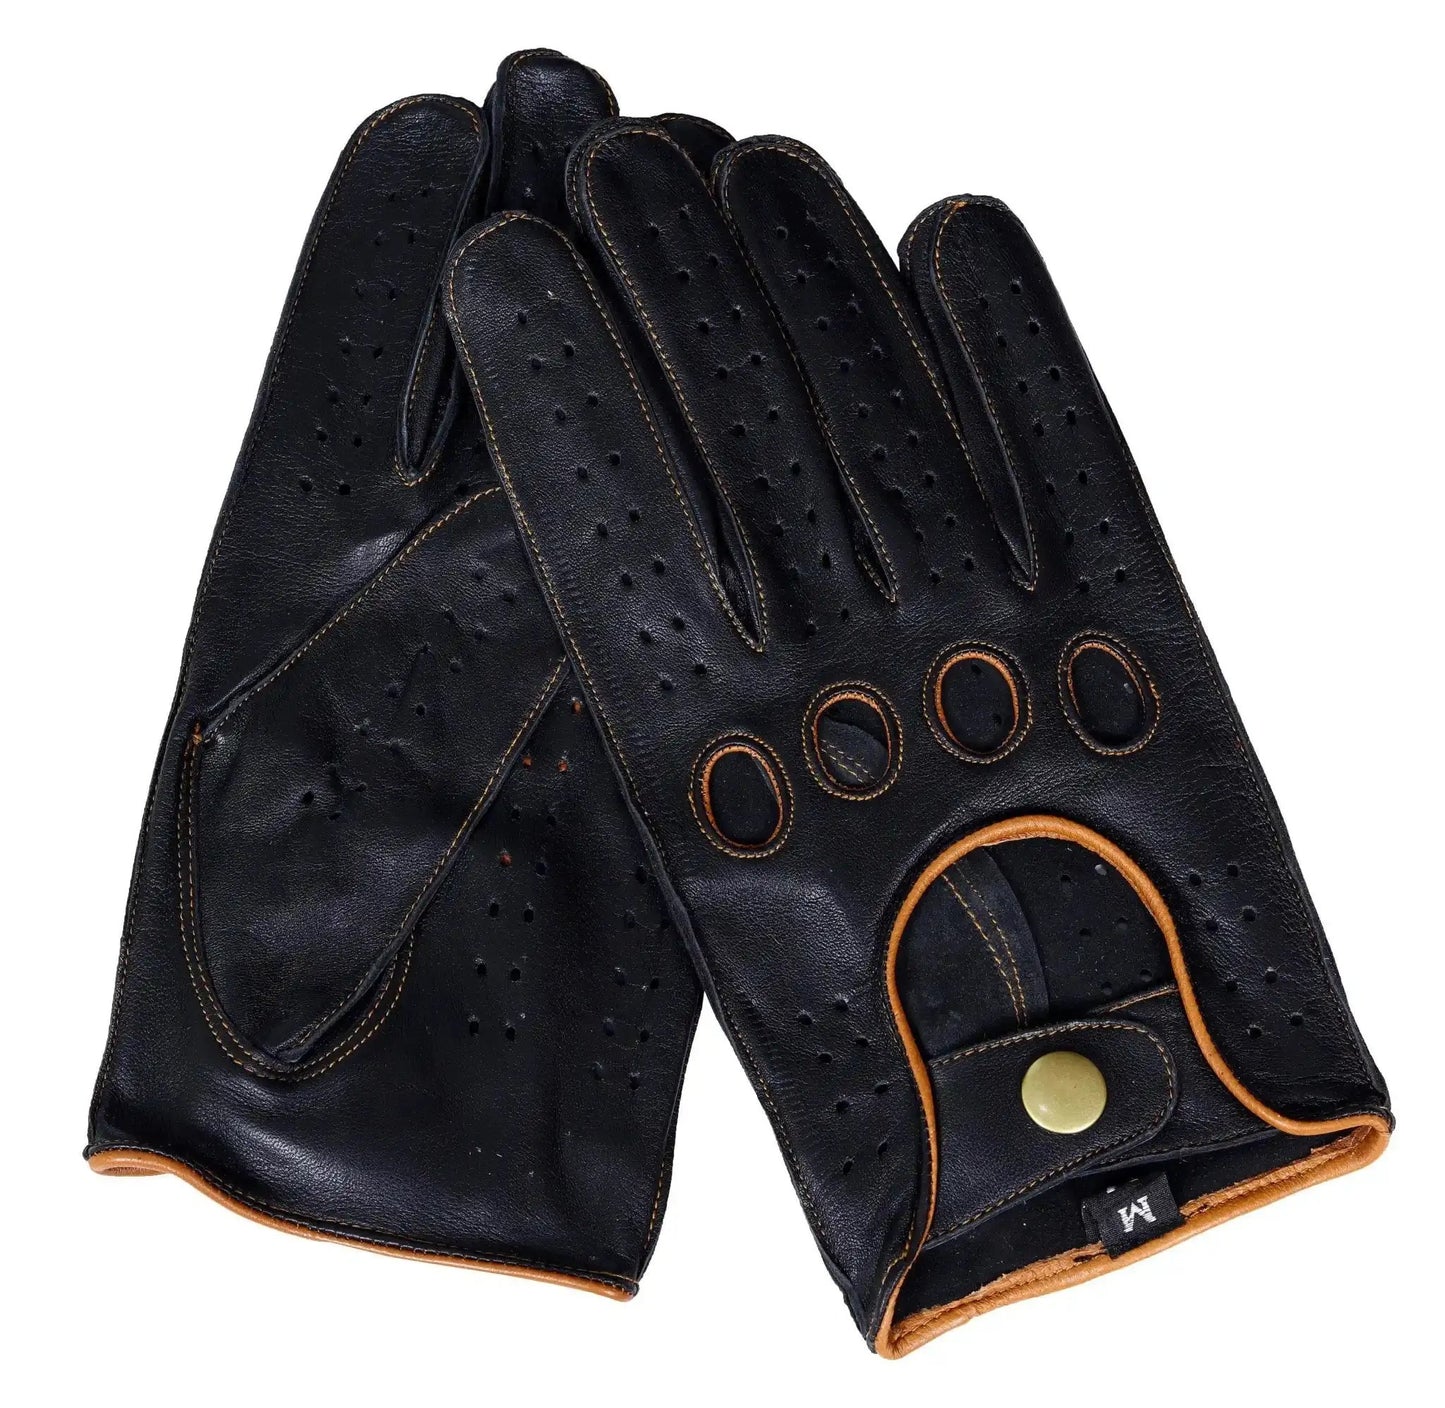 Black Brown Lambskin leather Gloves